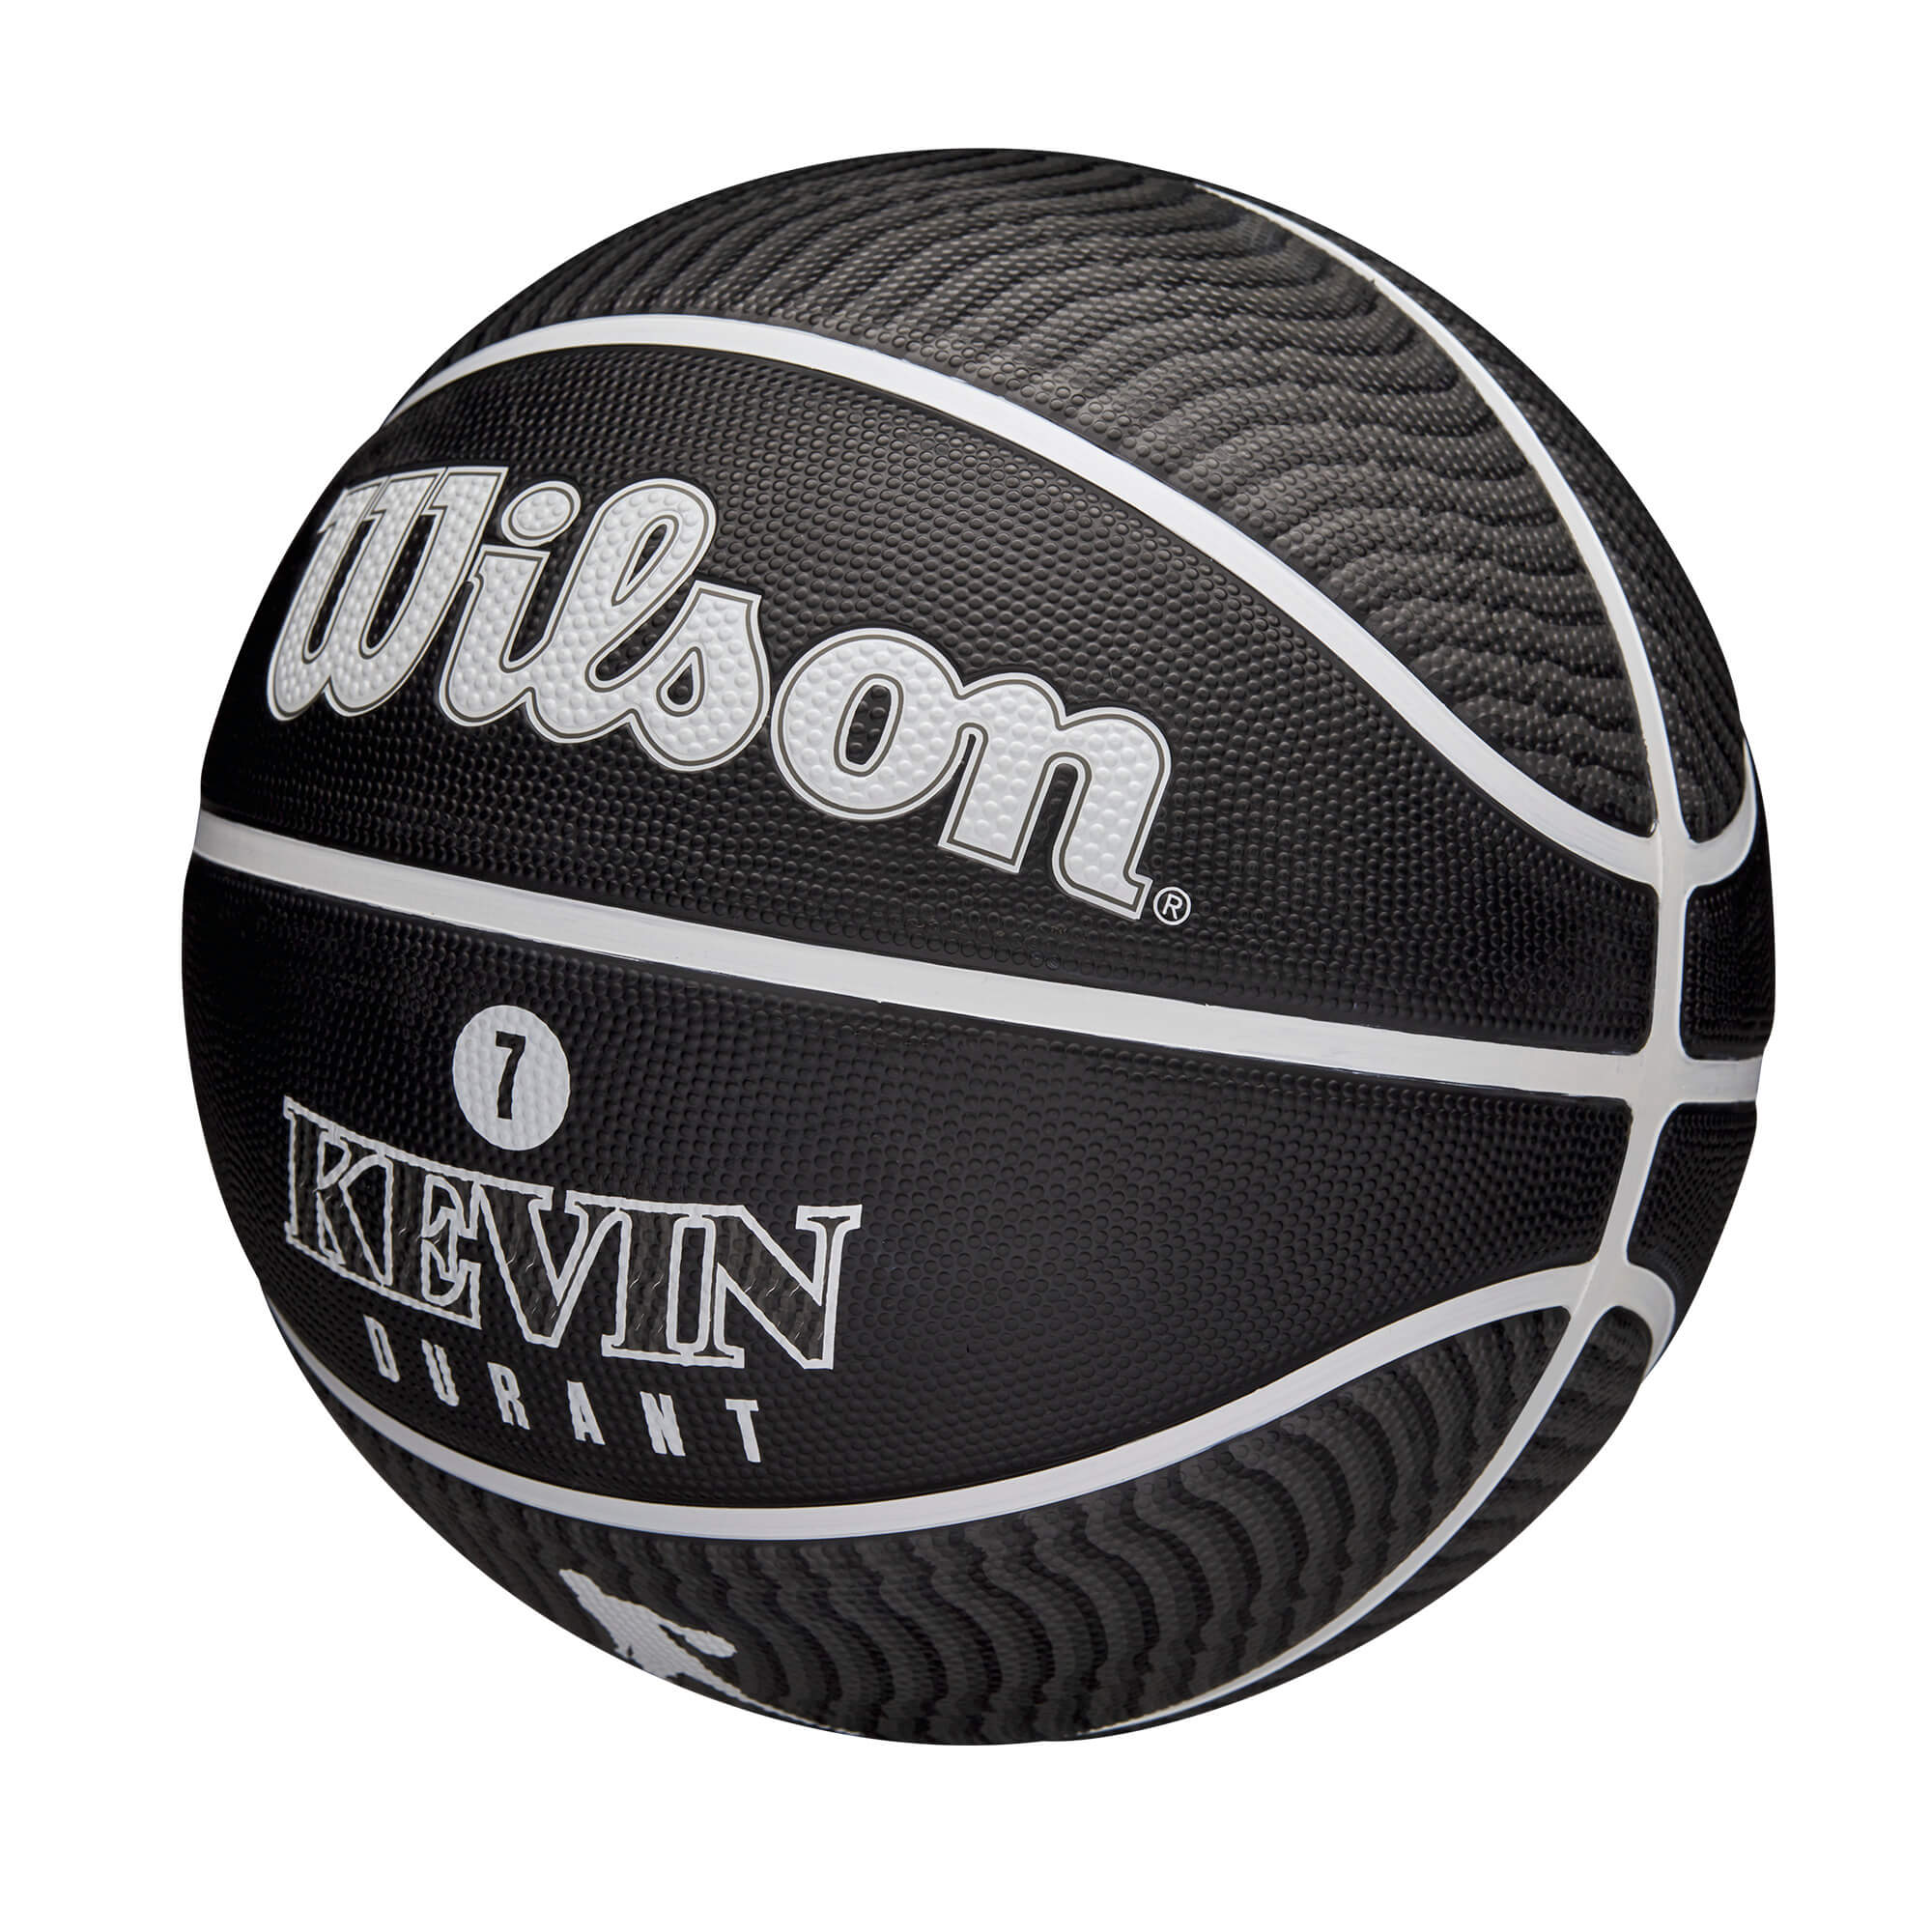 Ballons de basket NBA Player Kevin Durant